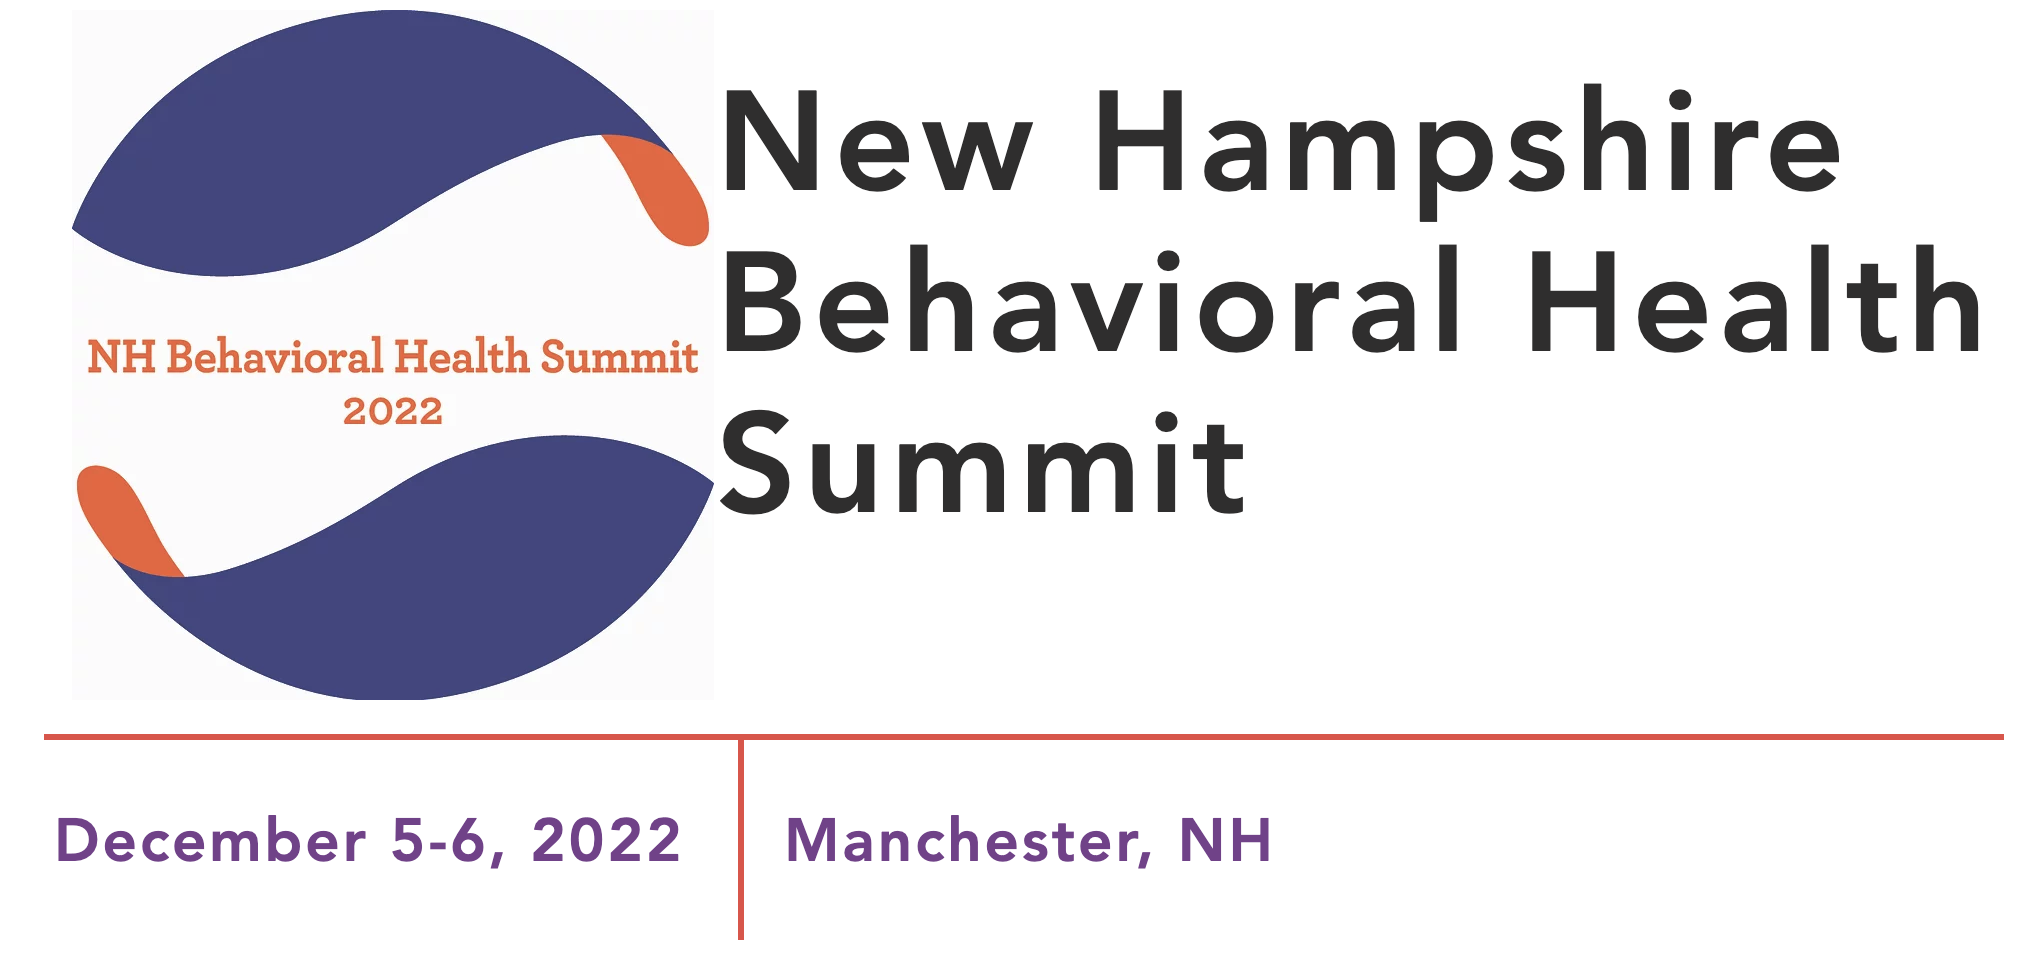 New Hampshire Behavioral Health Summit